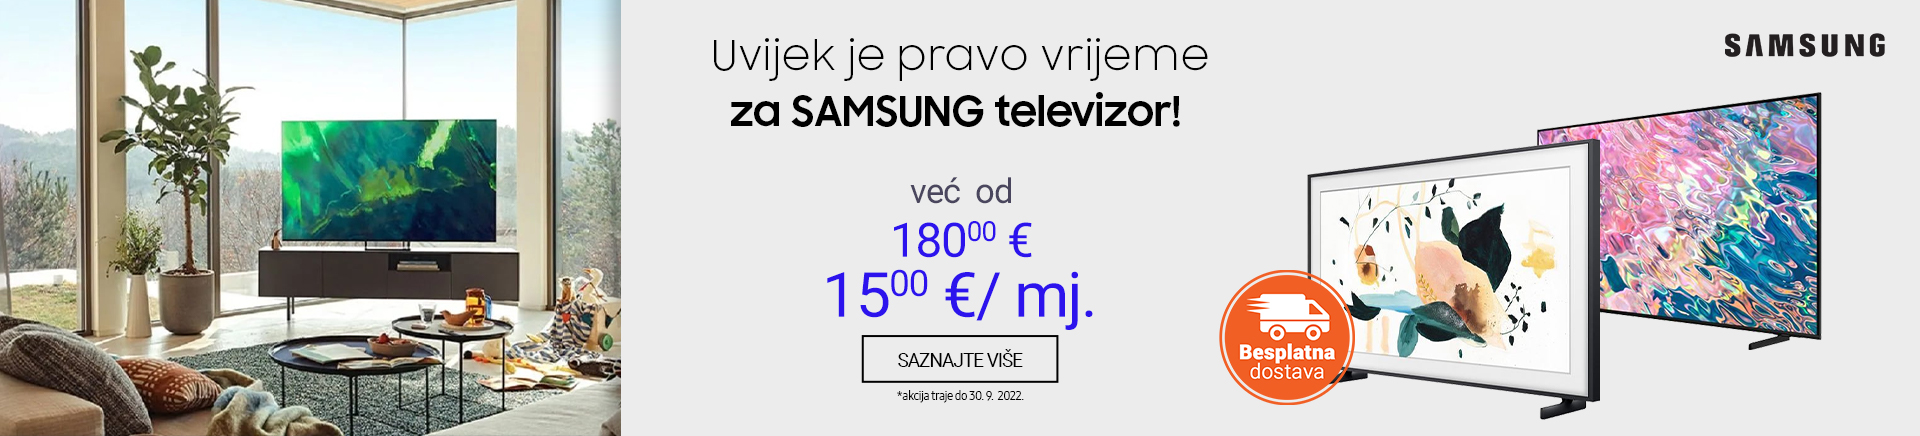 CG Samsung televizori MOBILE 380 X 436.jpg